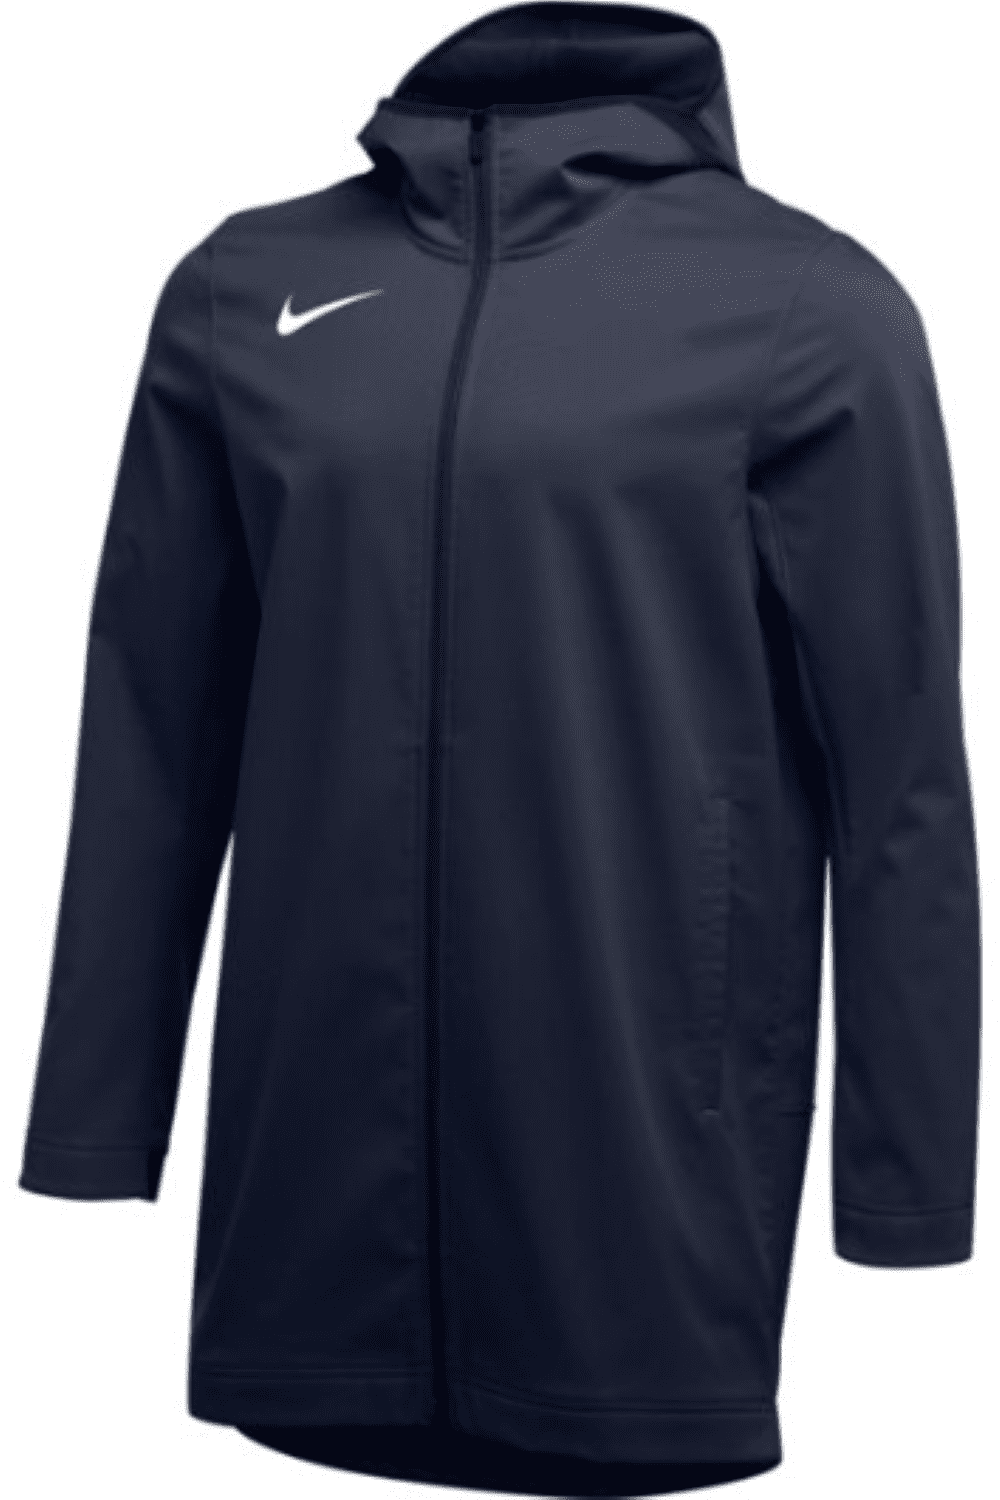 Nike Men's Protect Shield Repel Jacket AJ6719 419 size M Retail $140 New  with tag - Walmart.com